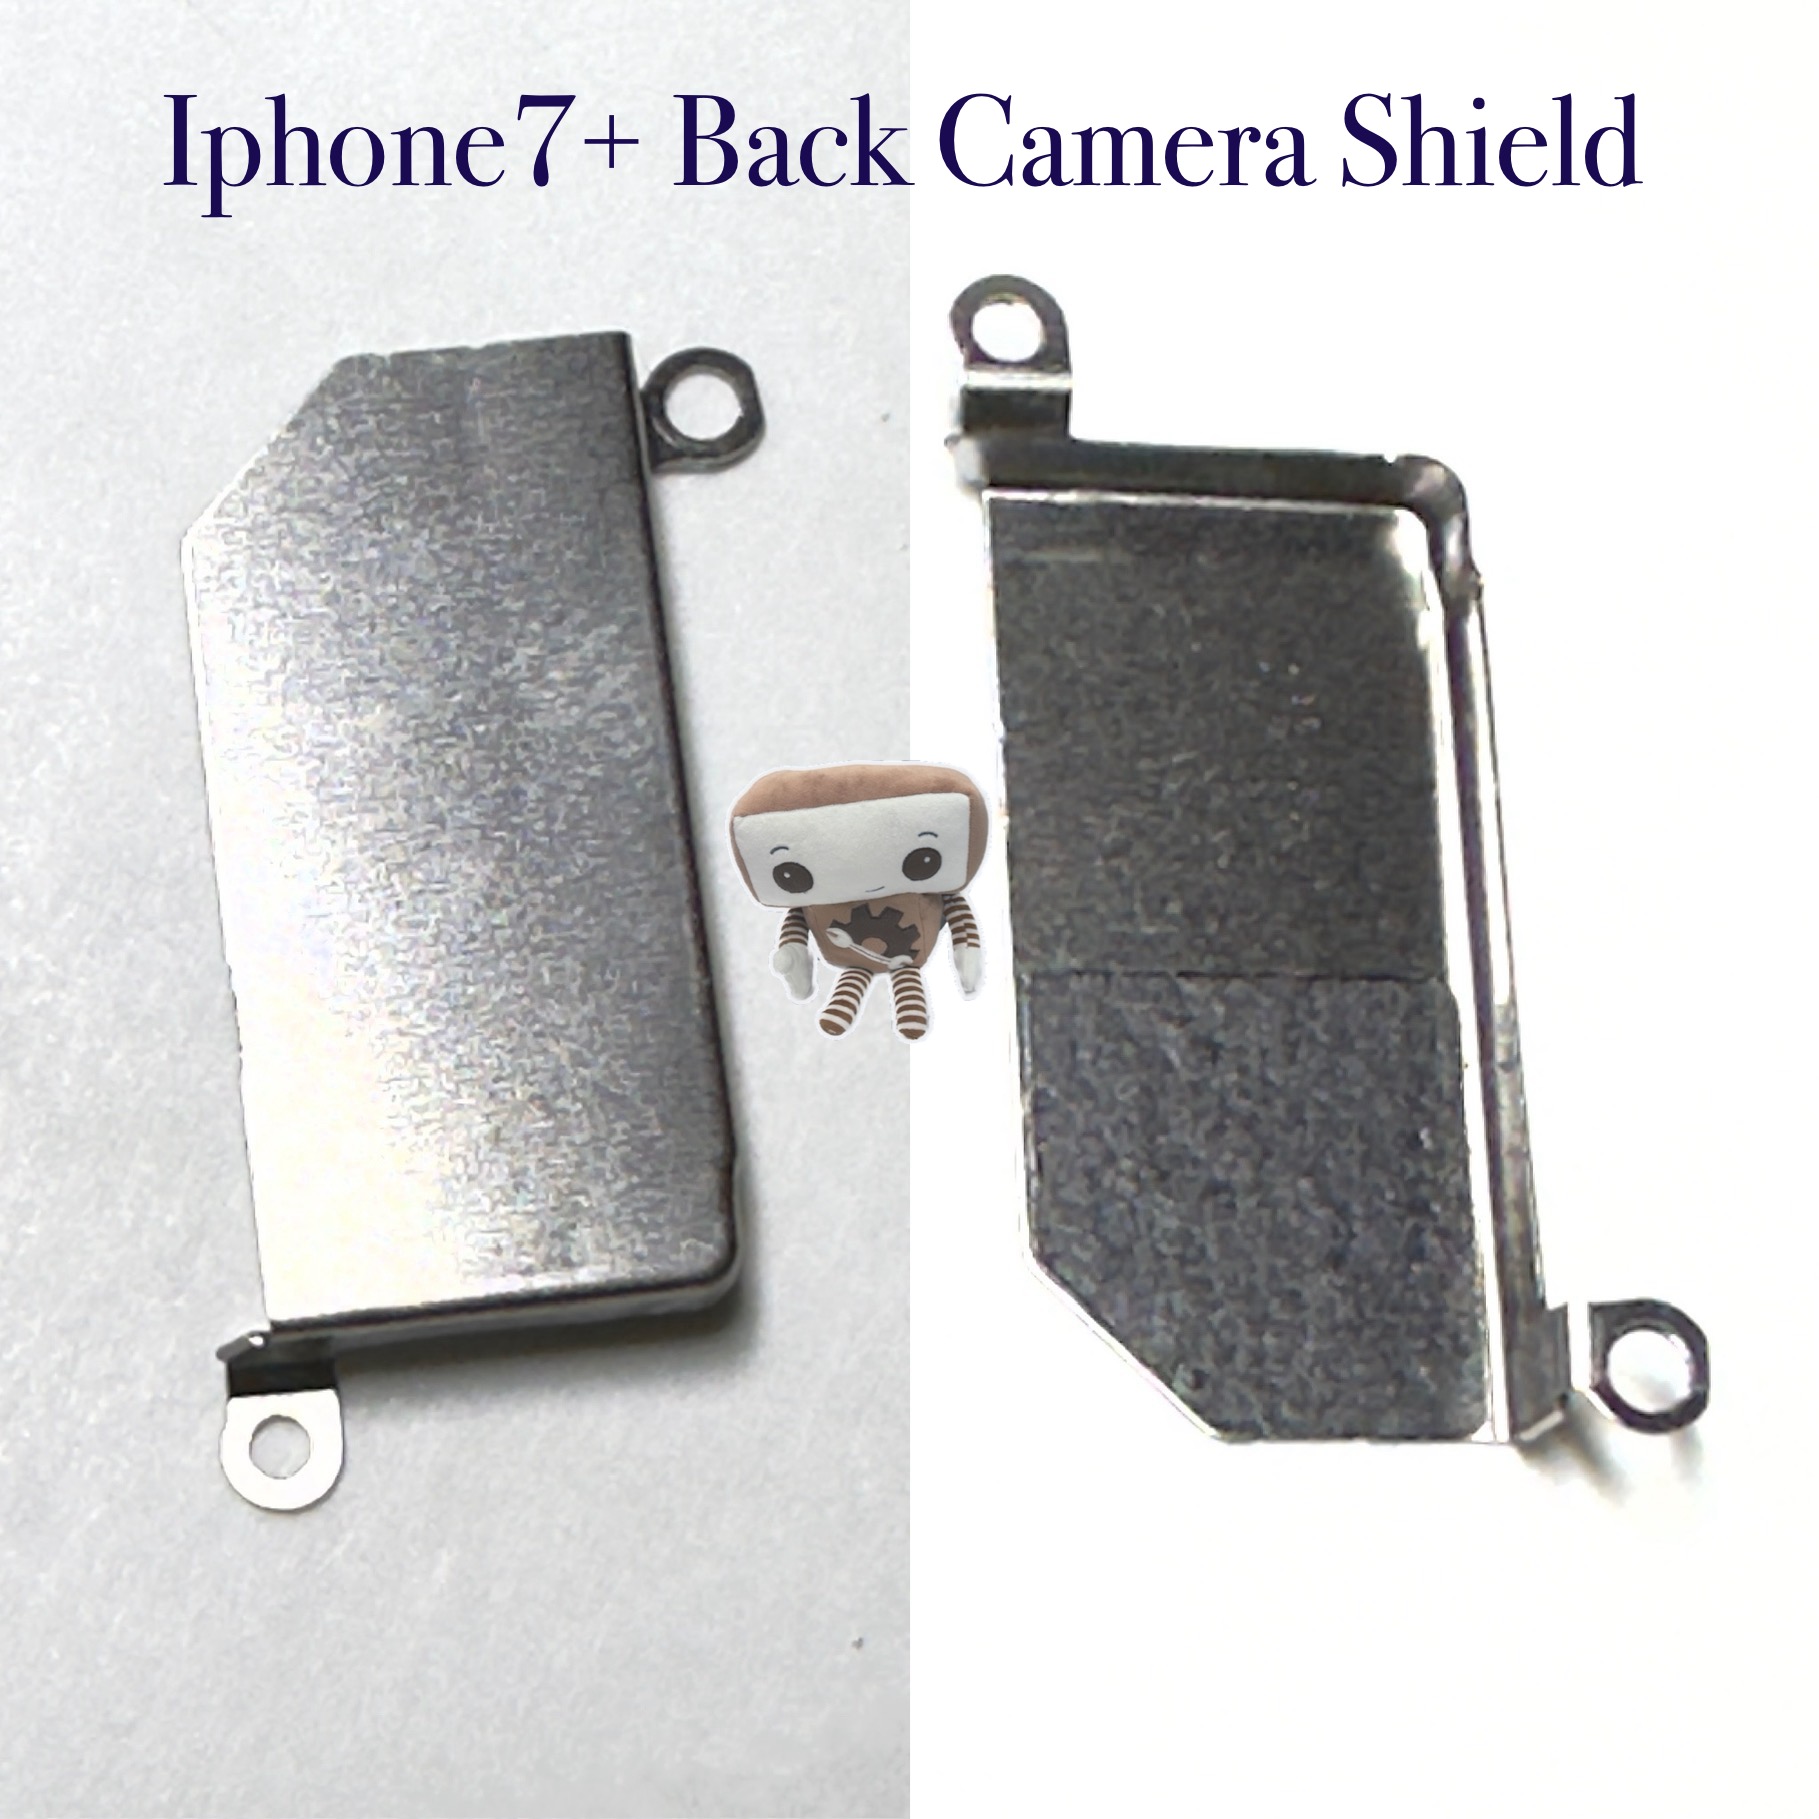 iphone7+ back camera shield